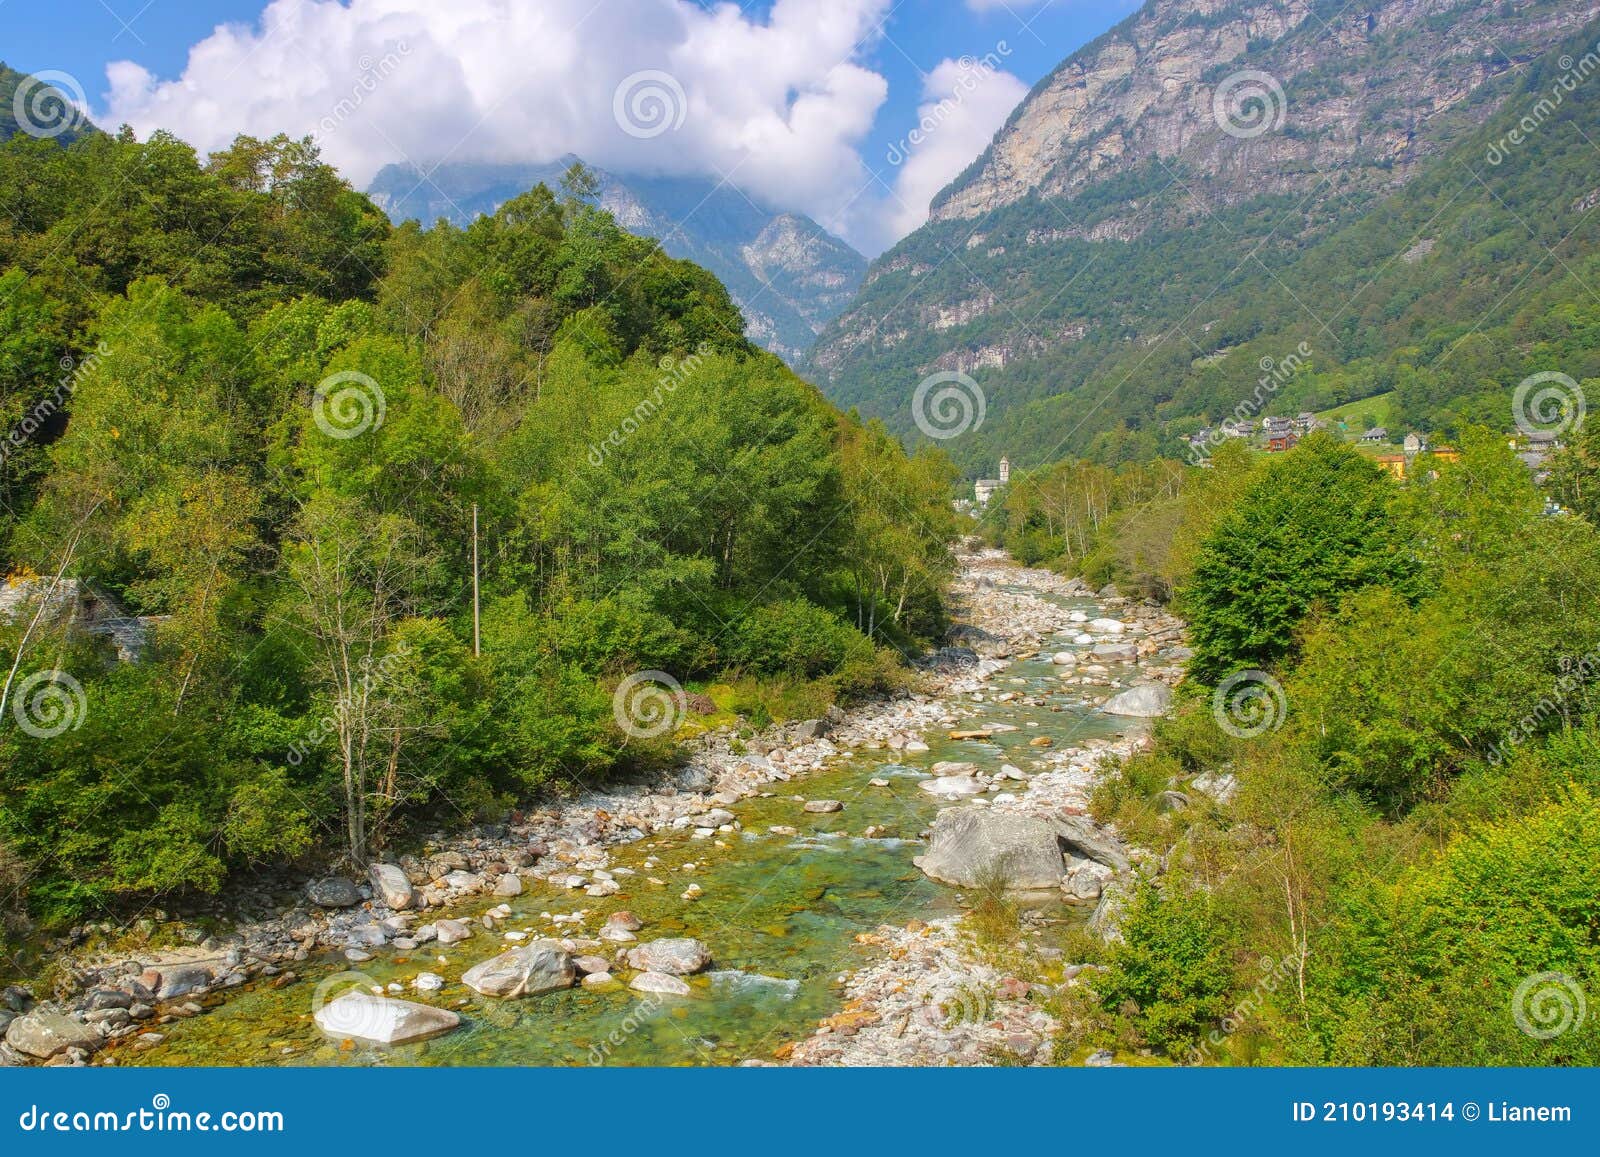 frasco and verzasca river, verzasca valley, ticino, switzerland